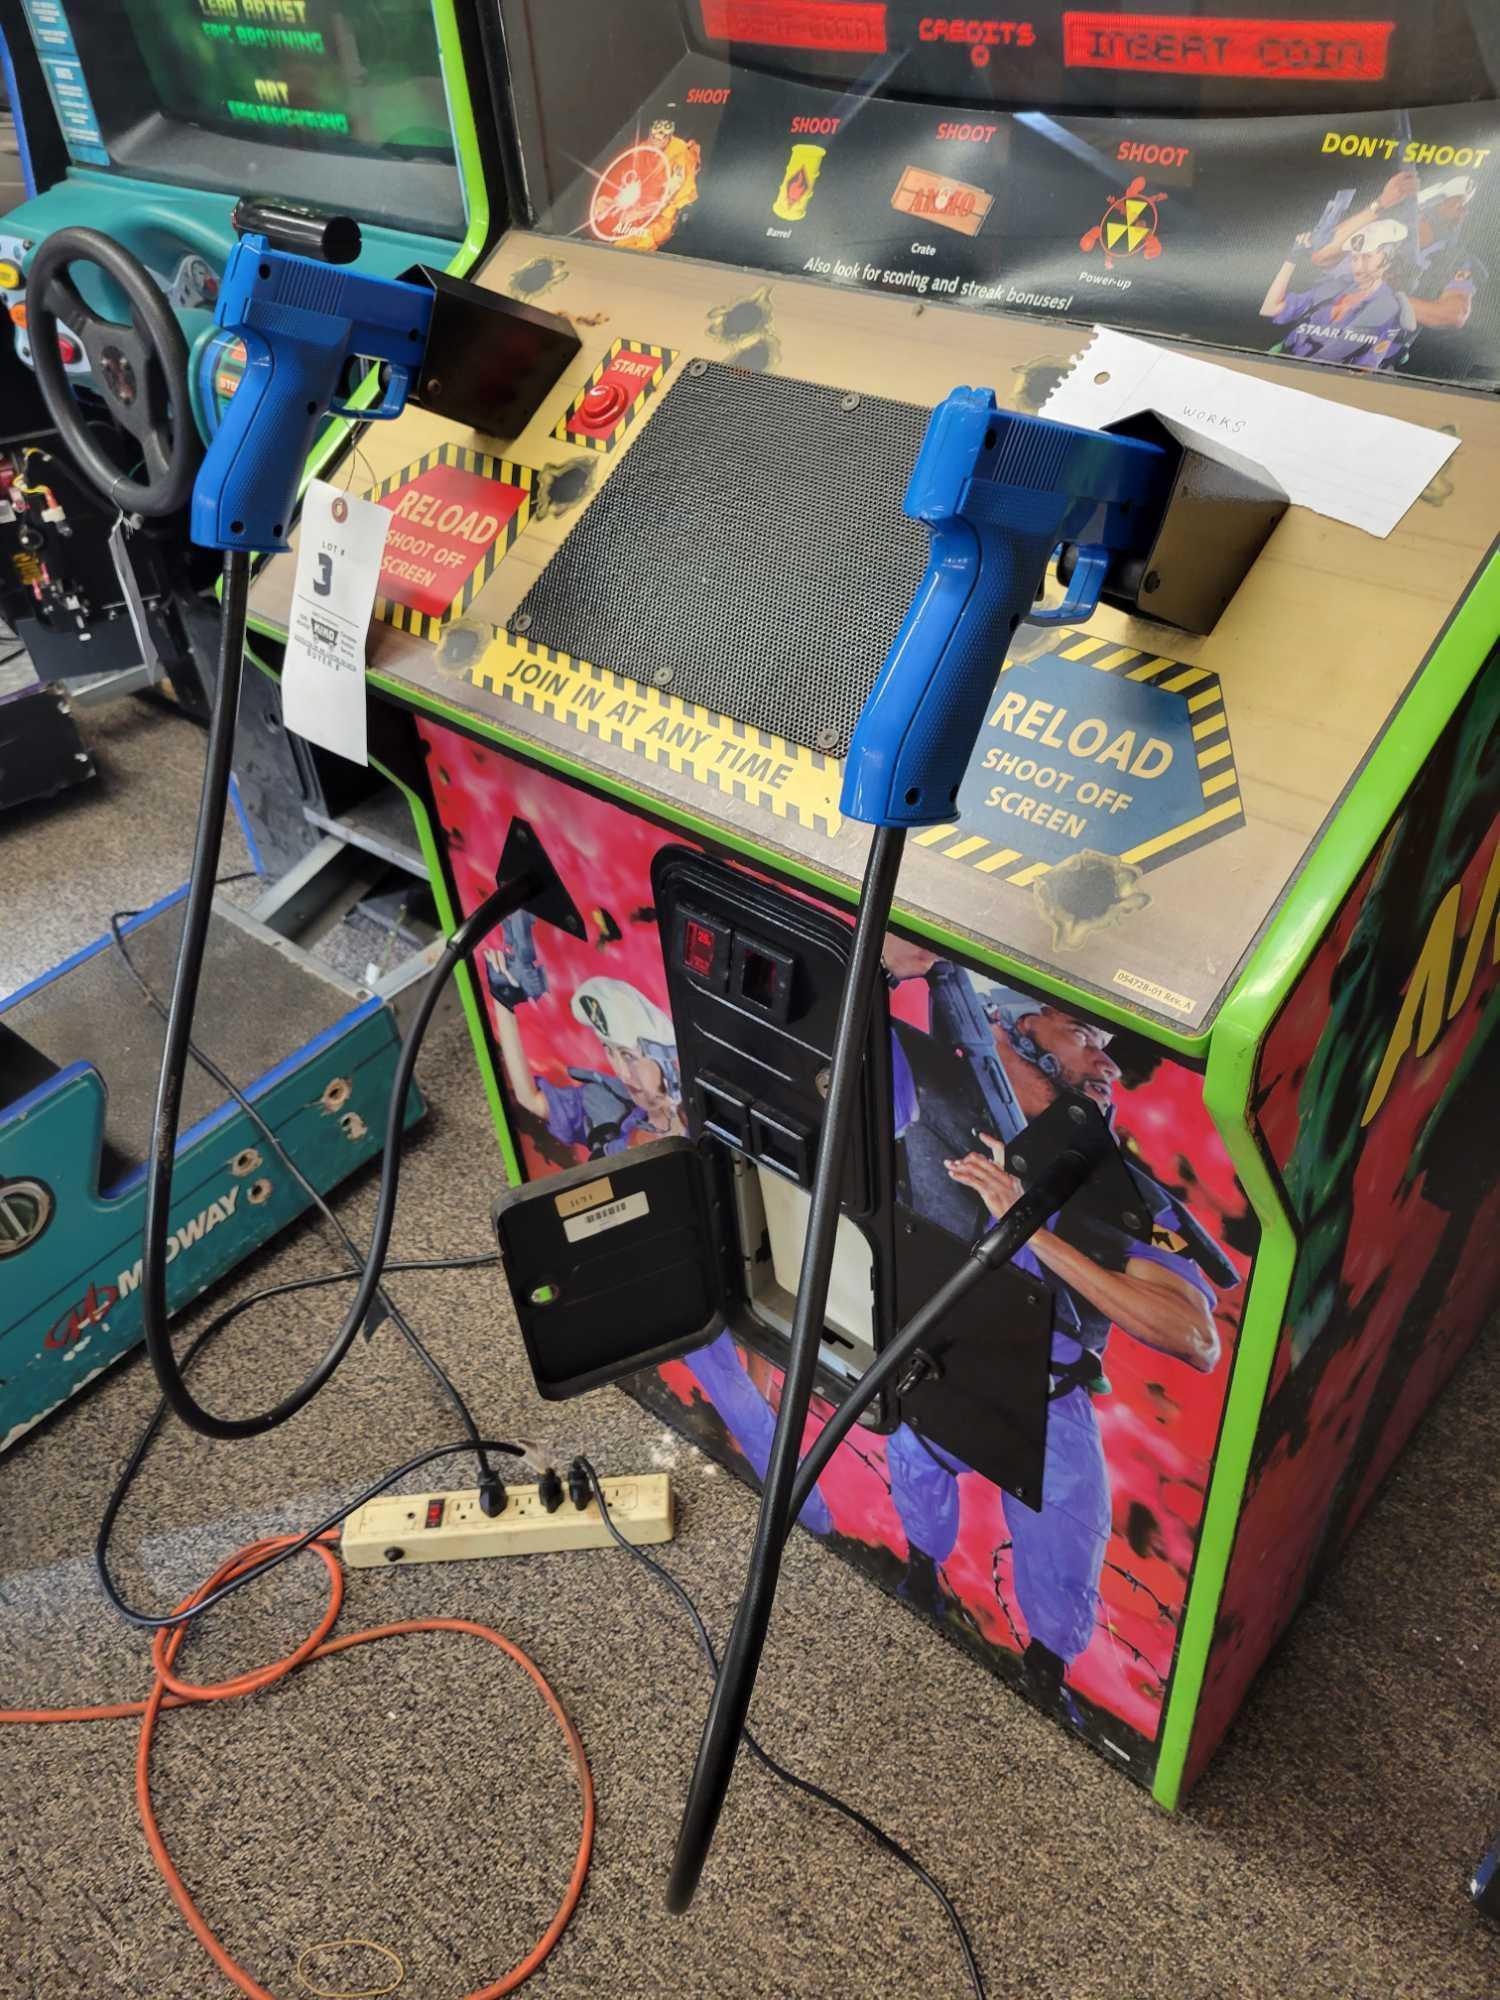 Atari model 25830 Area 51 25c arcade game, works